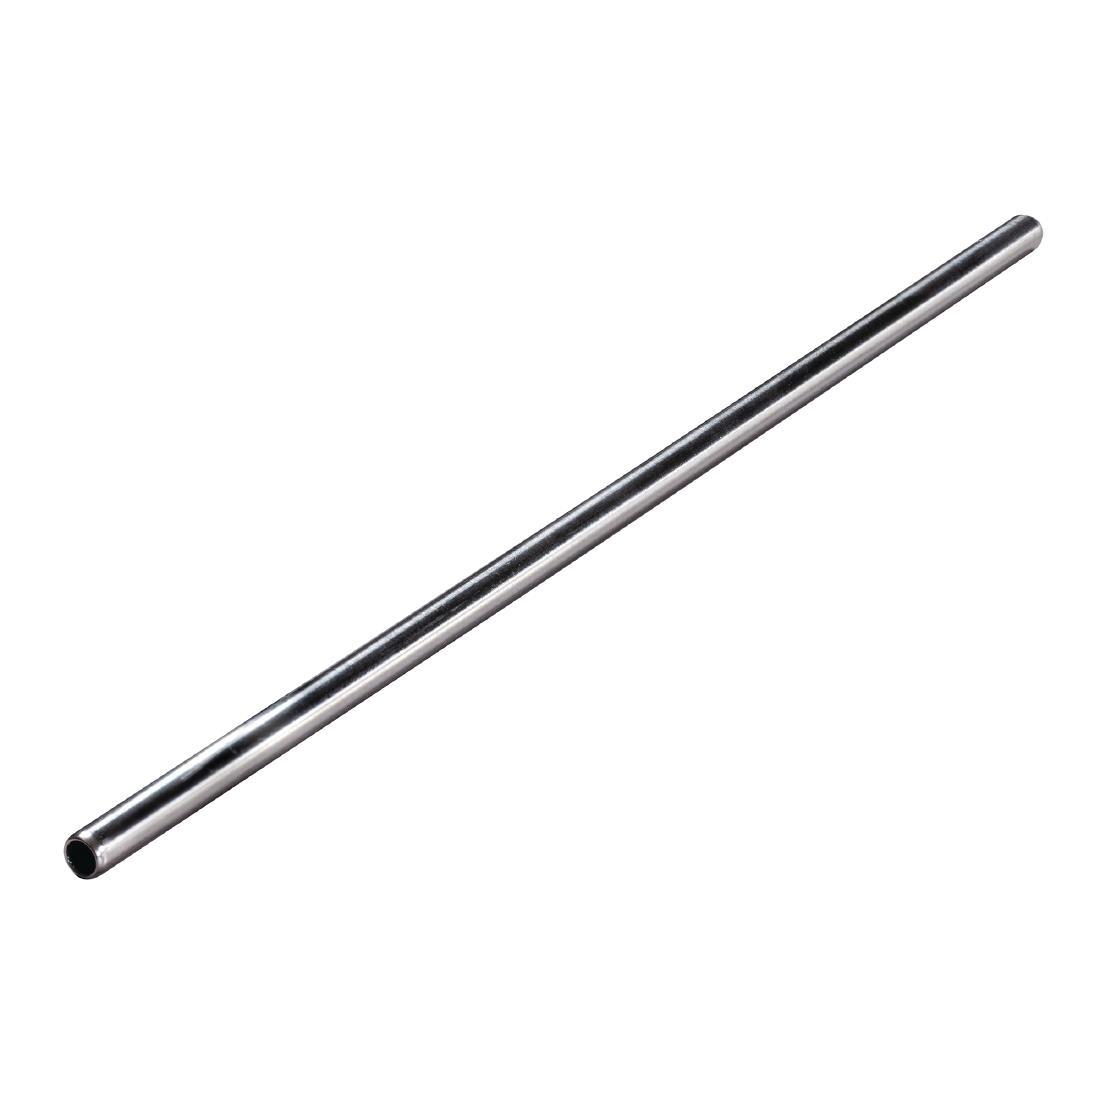 Stainless Steel Metal Straws 8.5" (Pack of 25) - CW490  - 1